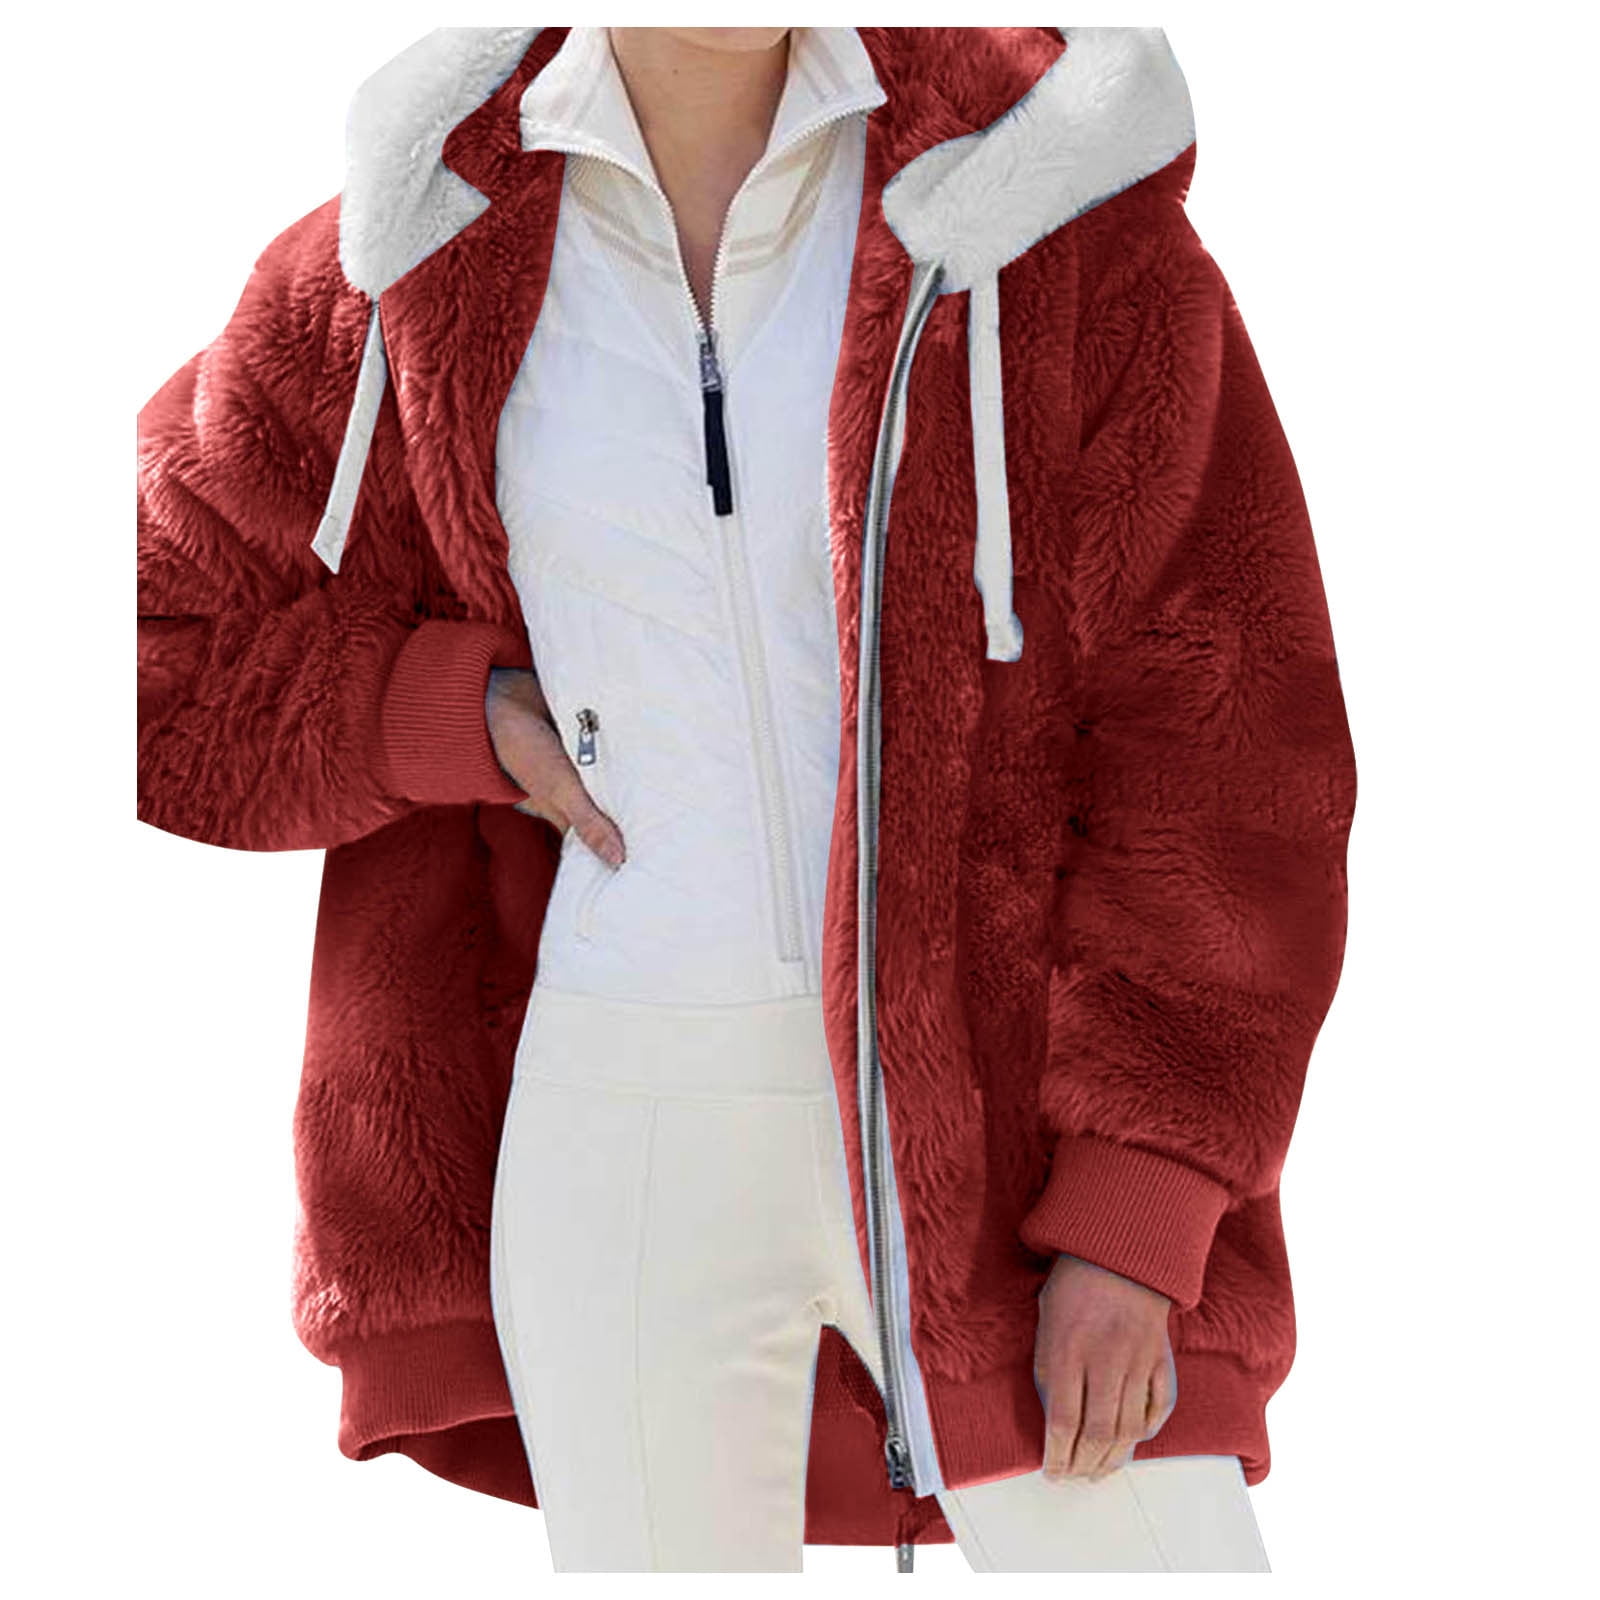 HGWXX7 Womens Hoodie Quarter Zip Solid Color Pullover Winter Fuzzy Fleece Warm Long Sleeve Plus Size Pocket Coat Outwear 